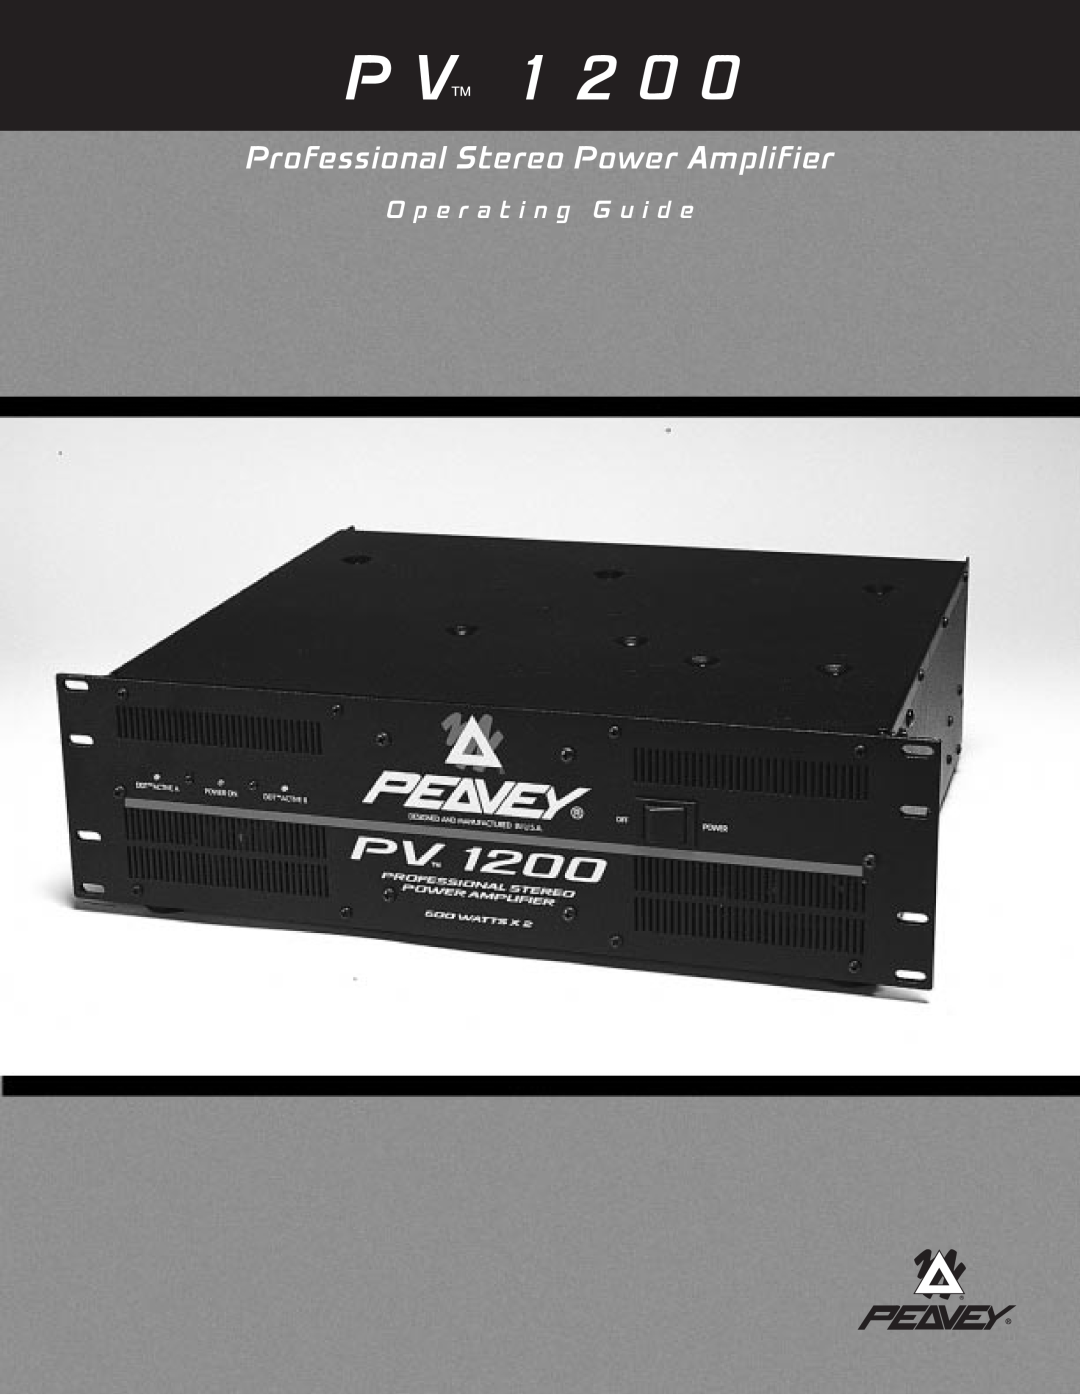 Peavey PV 1200 manual Professional Stereo Power Amplifier, O p e r a t i n g G u i d e 